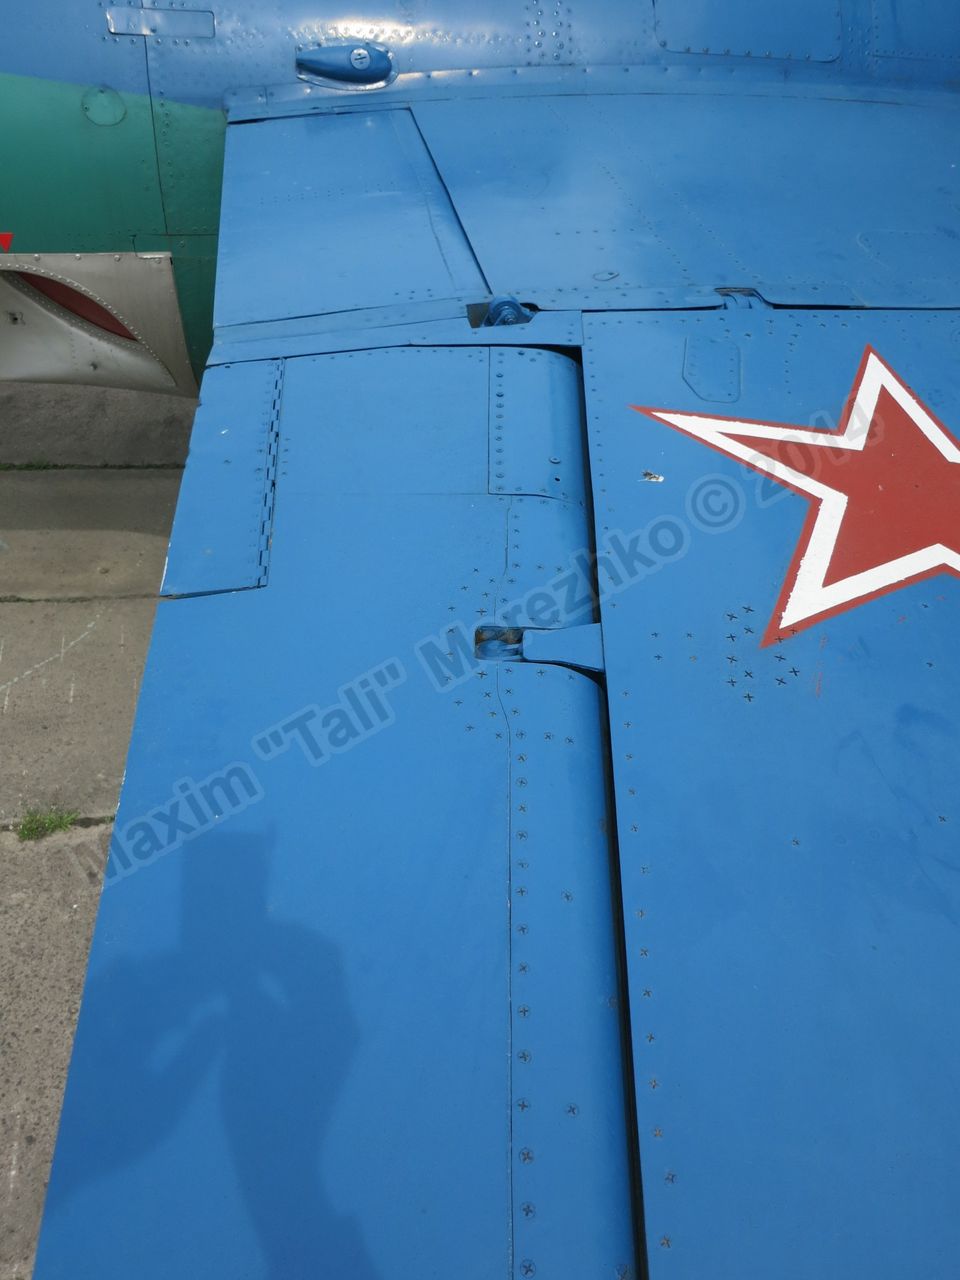 Yak-38_Forger-A_0016.jpg